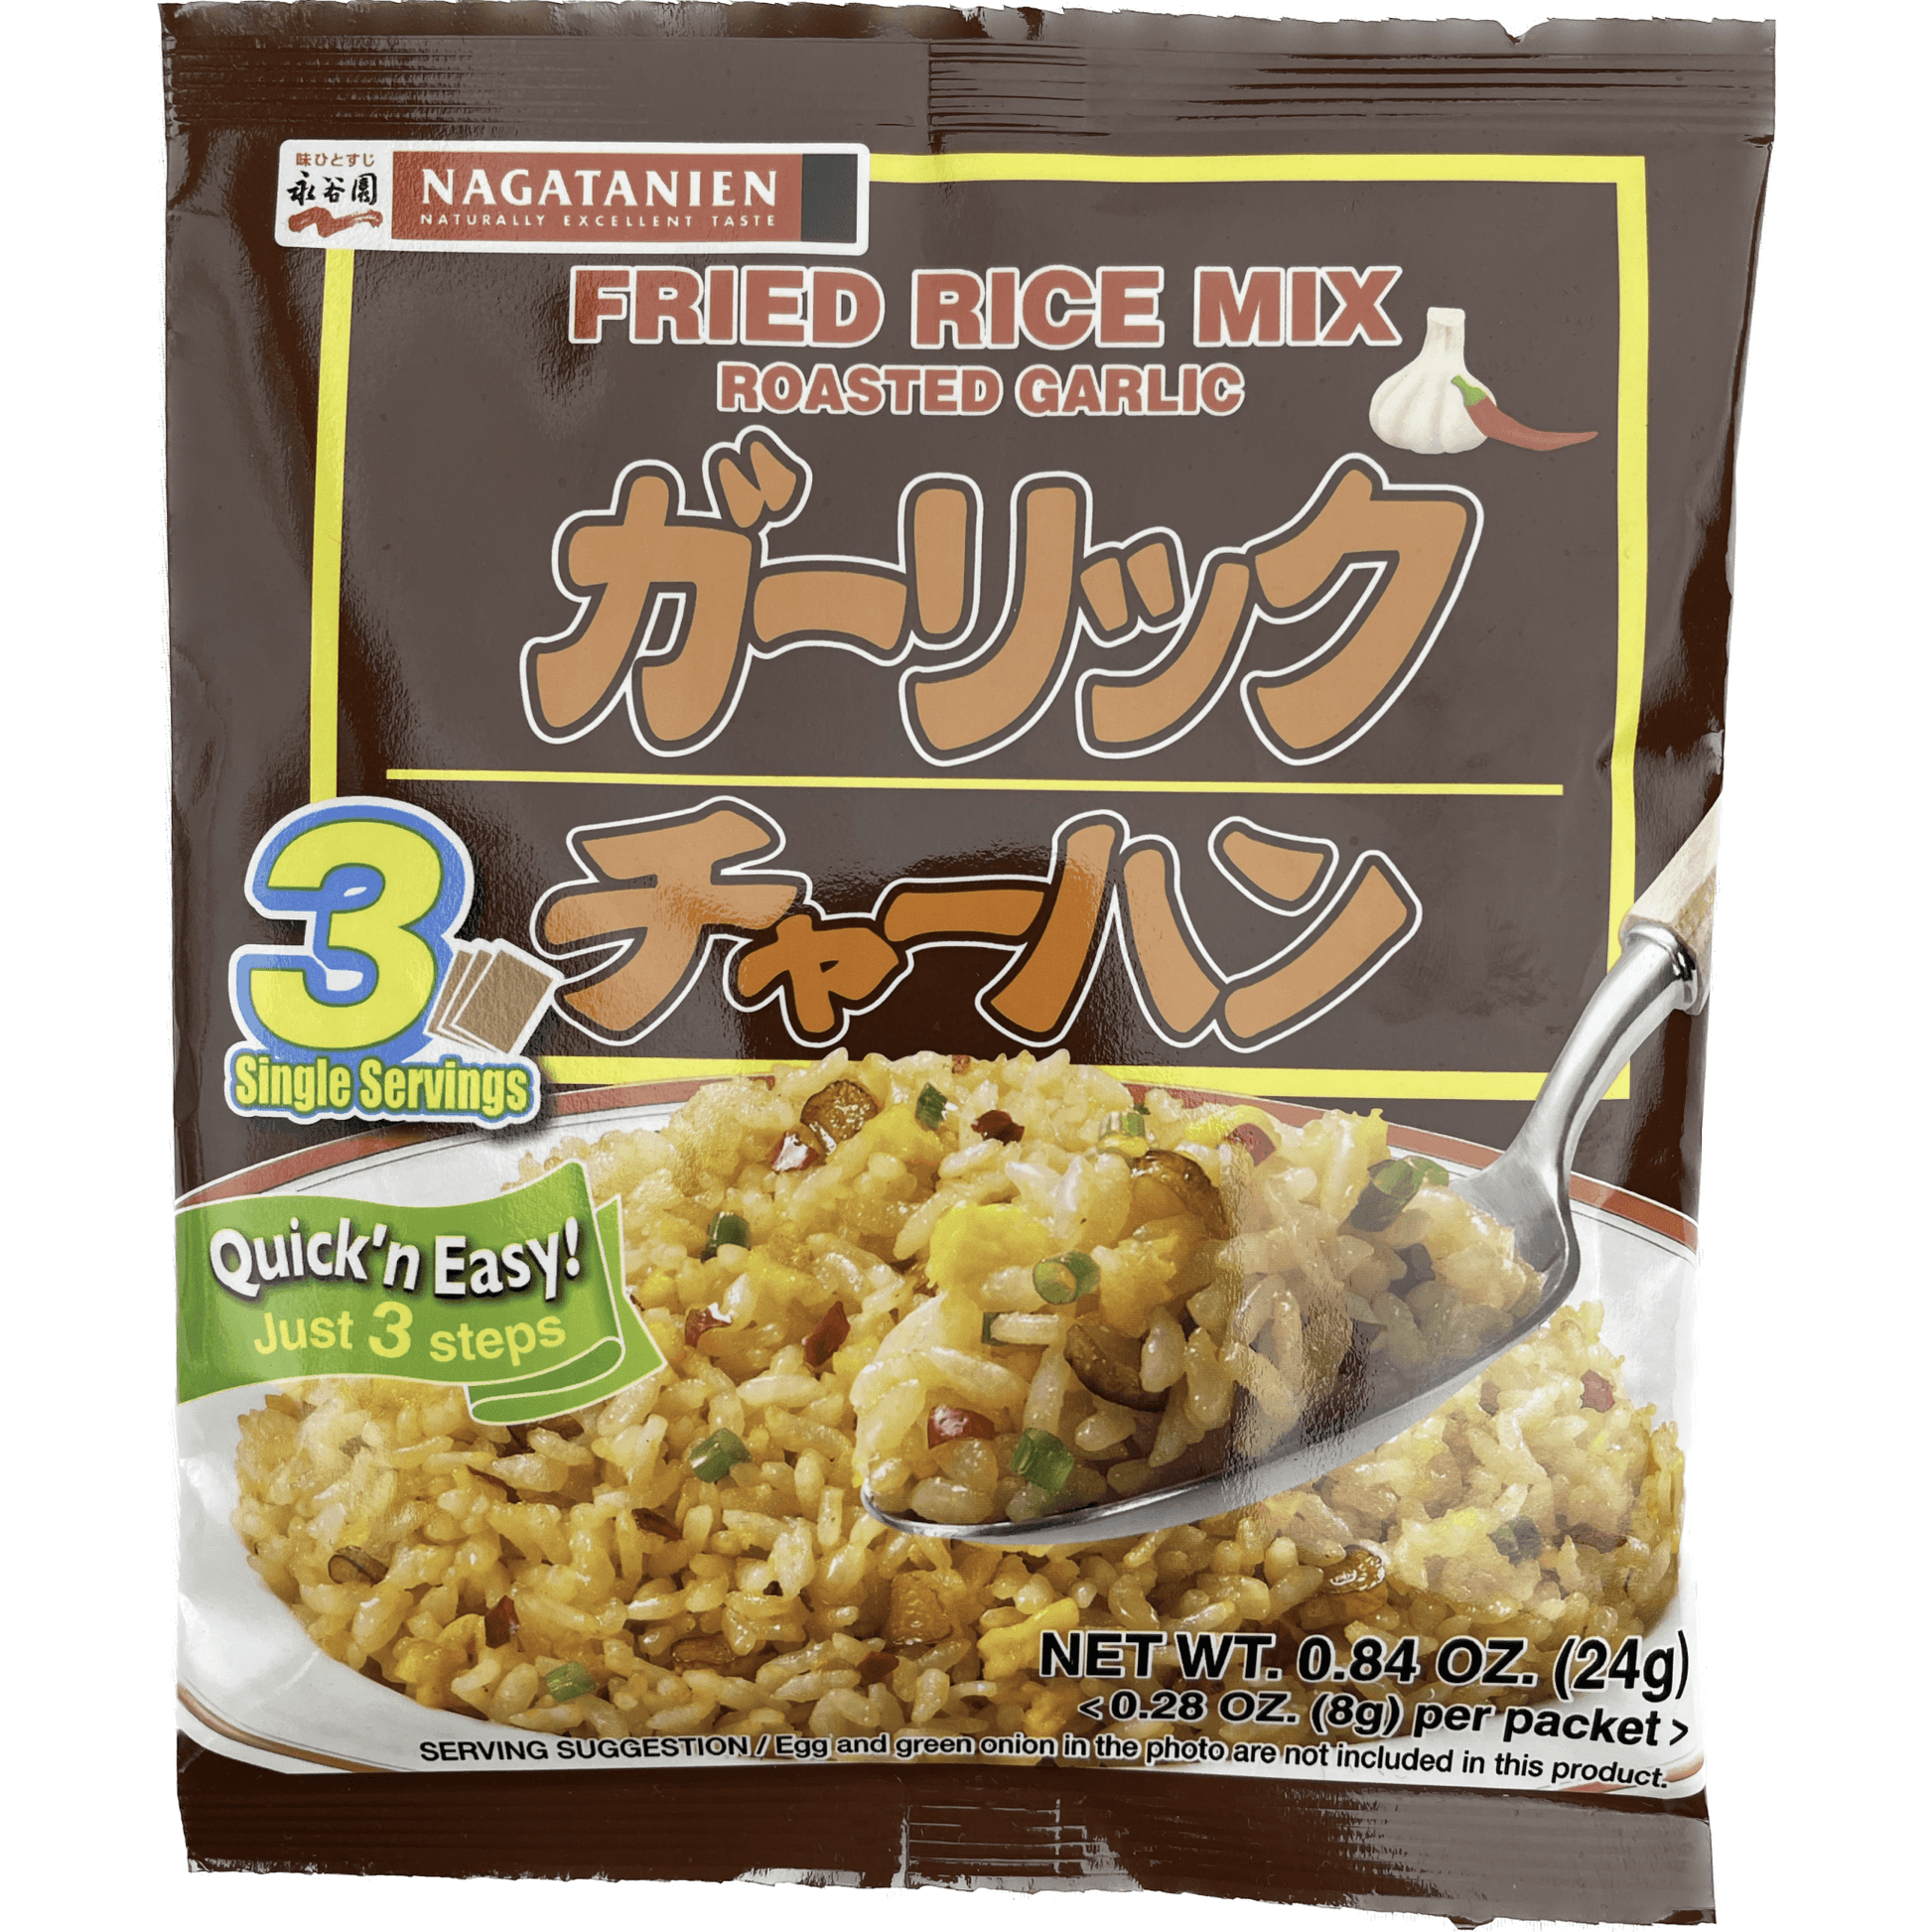 Nagatanien Fried Rice Mix Roasted Garlic 3 servings / 永谷園 ガーリックチャーハン 3食入 - RiceWineShop